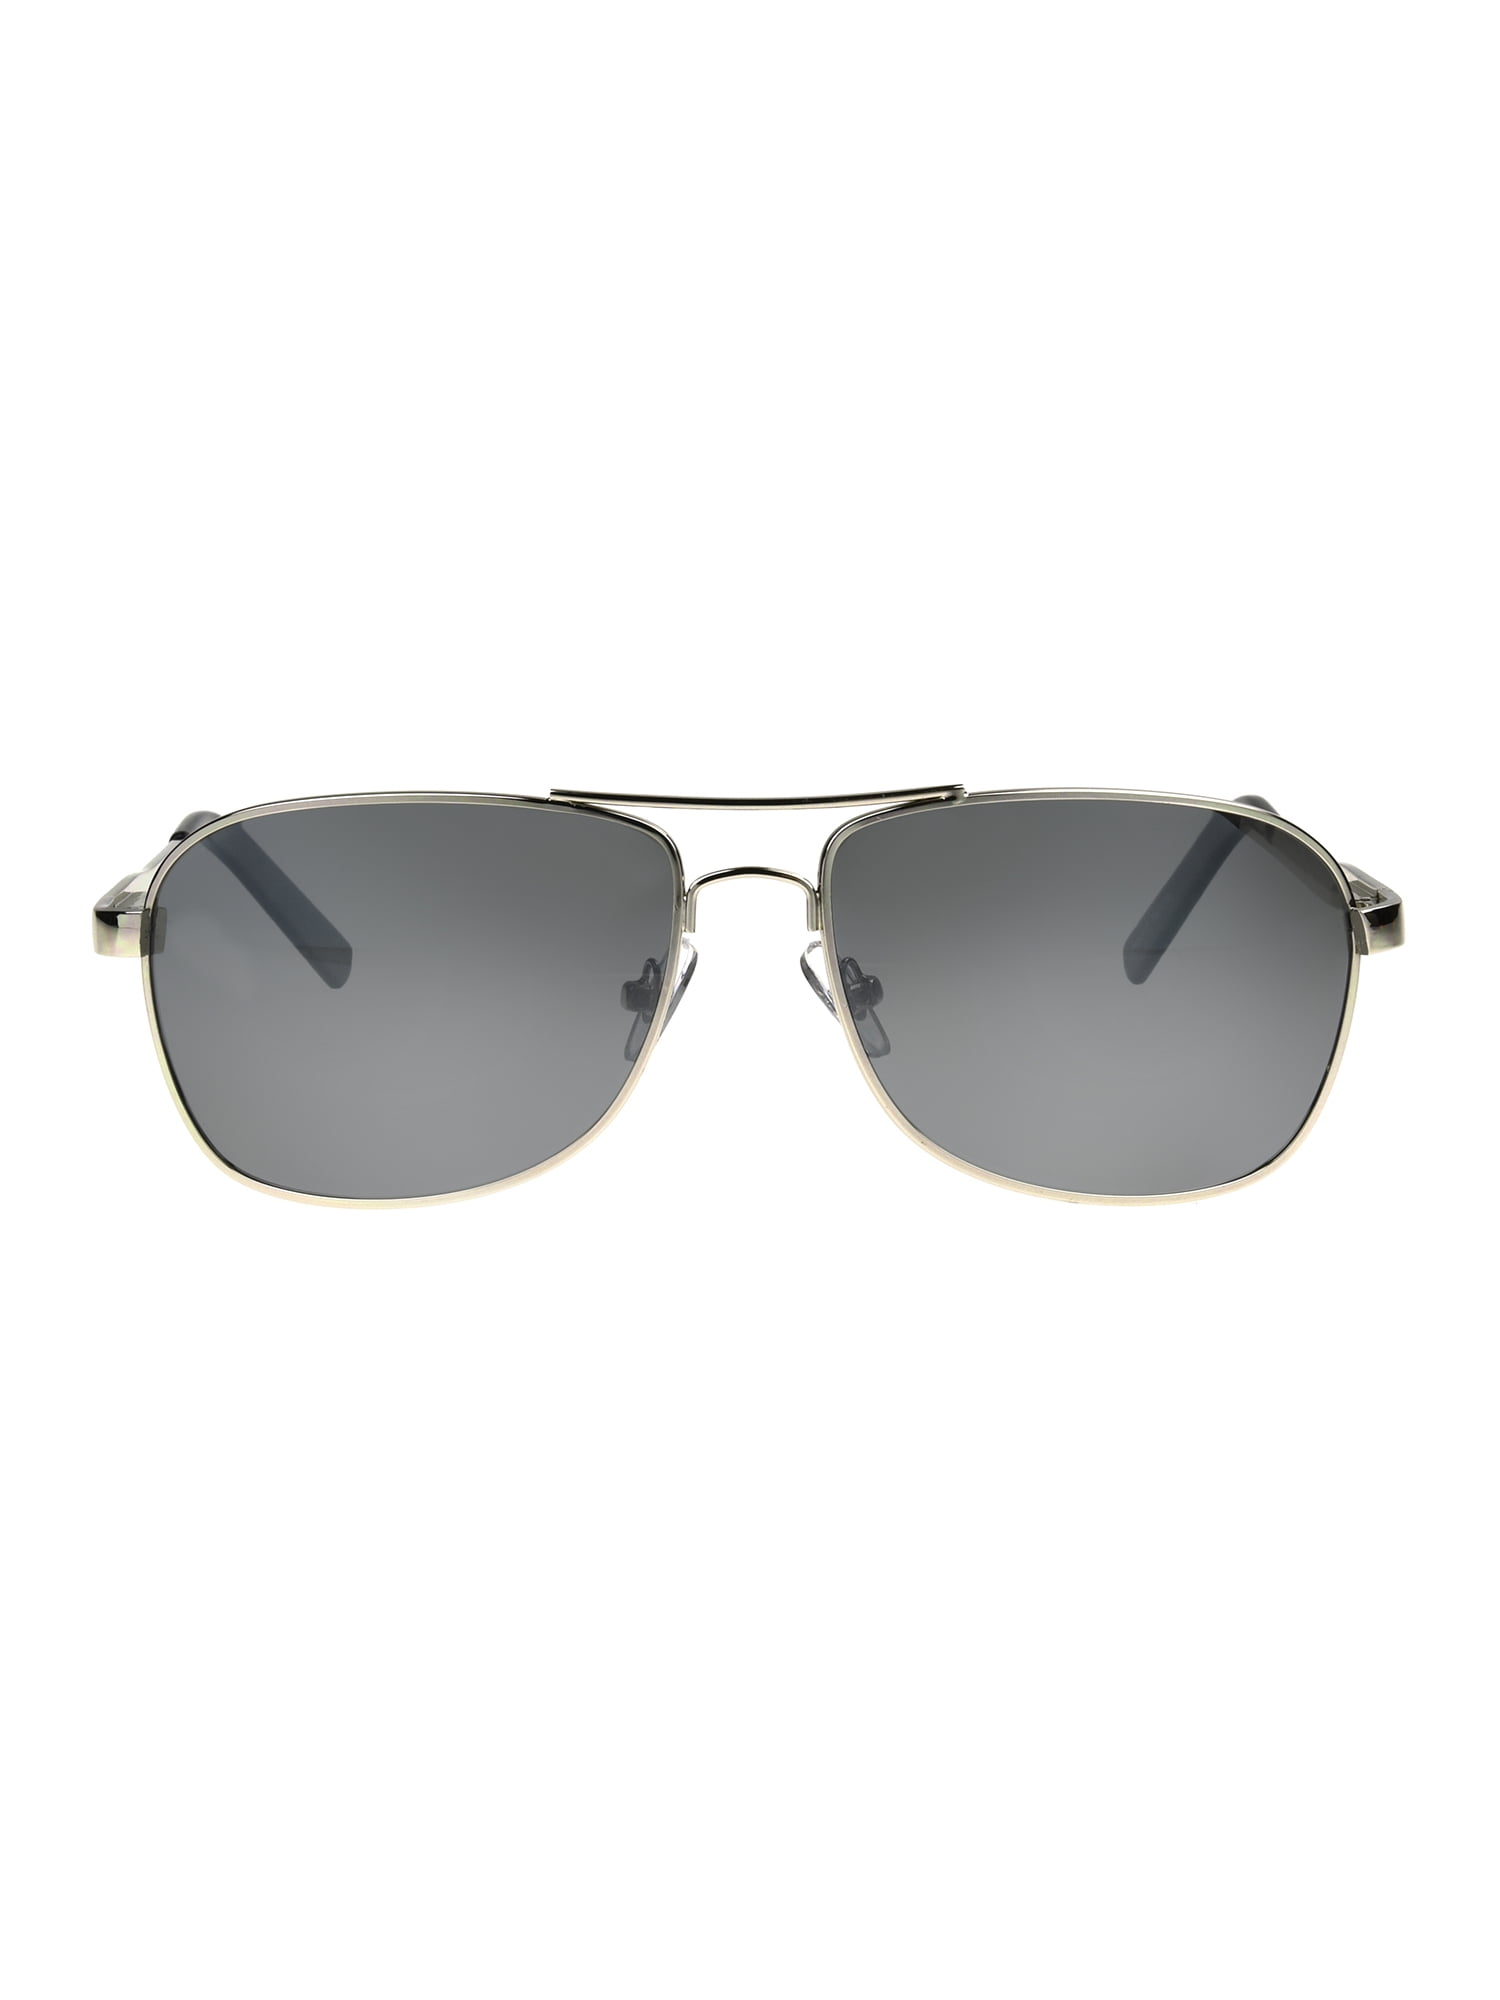 Foster Grant Mens Square Silver Adult Sunglasses - Walmart.com